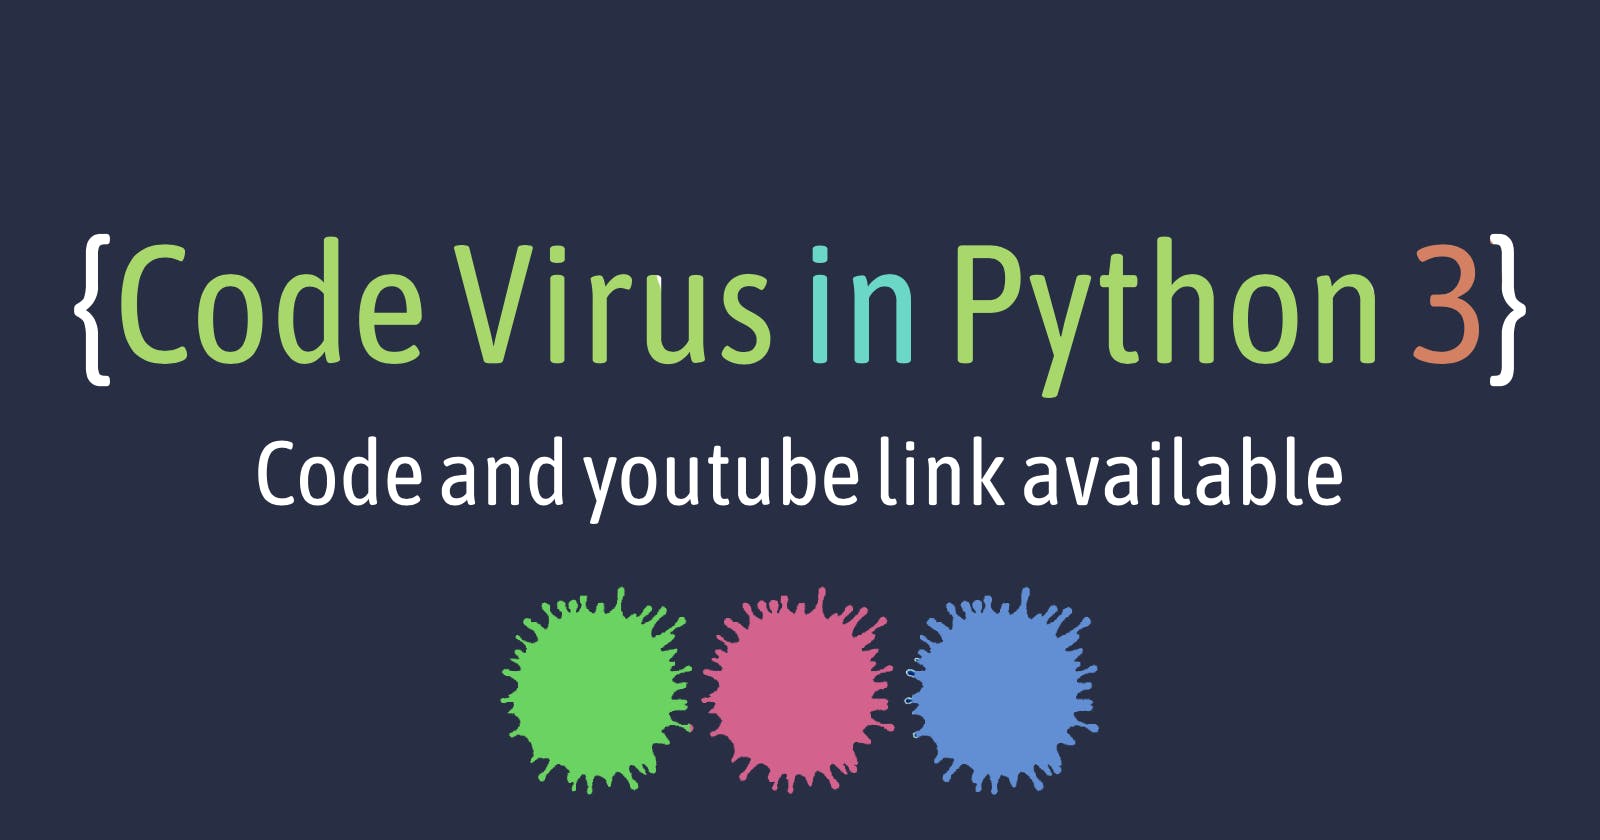 Code virus in Python 3